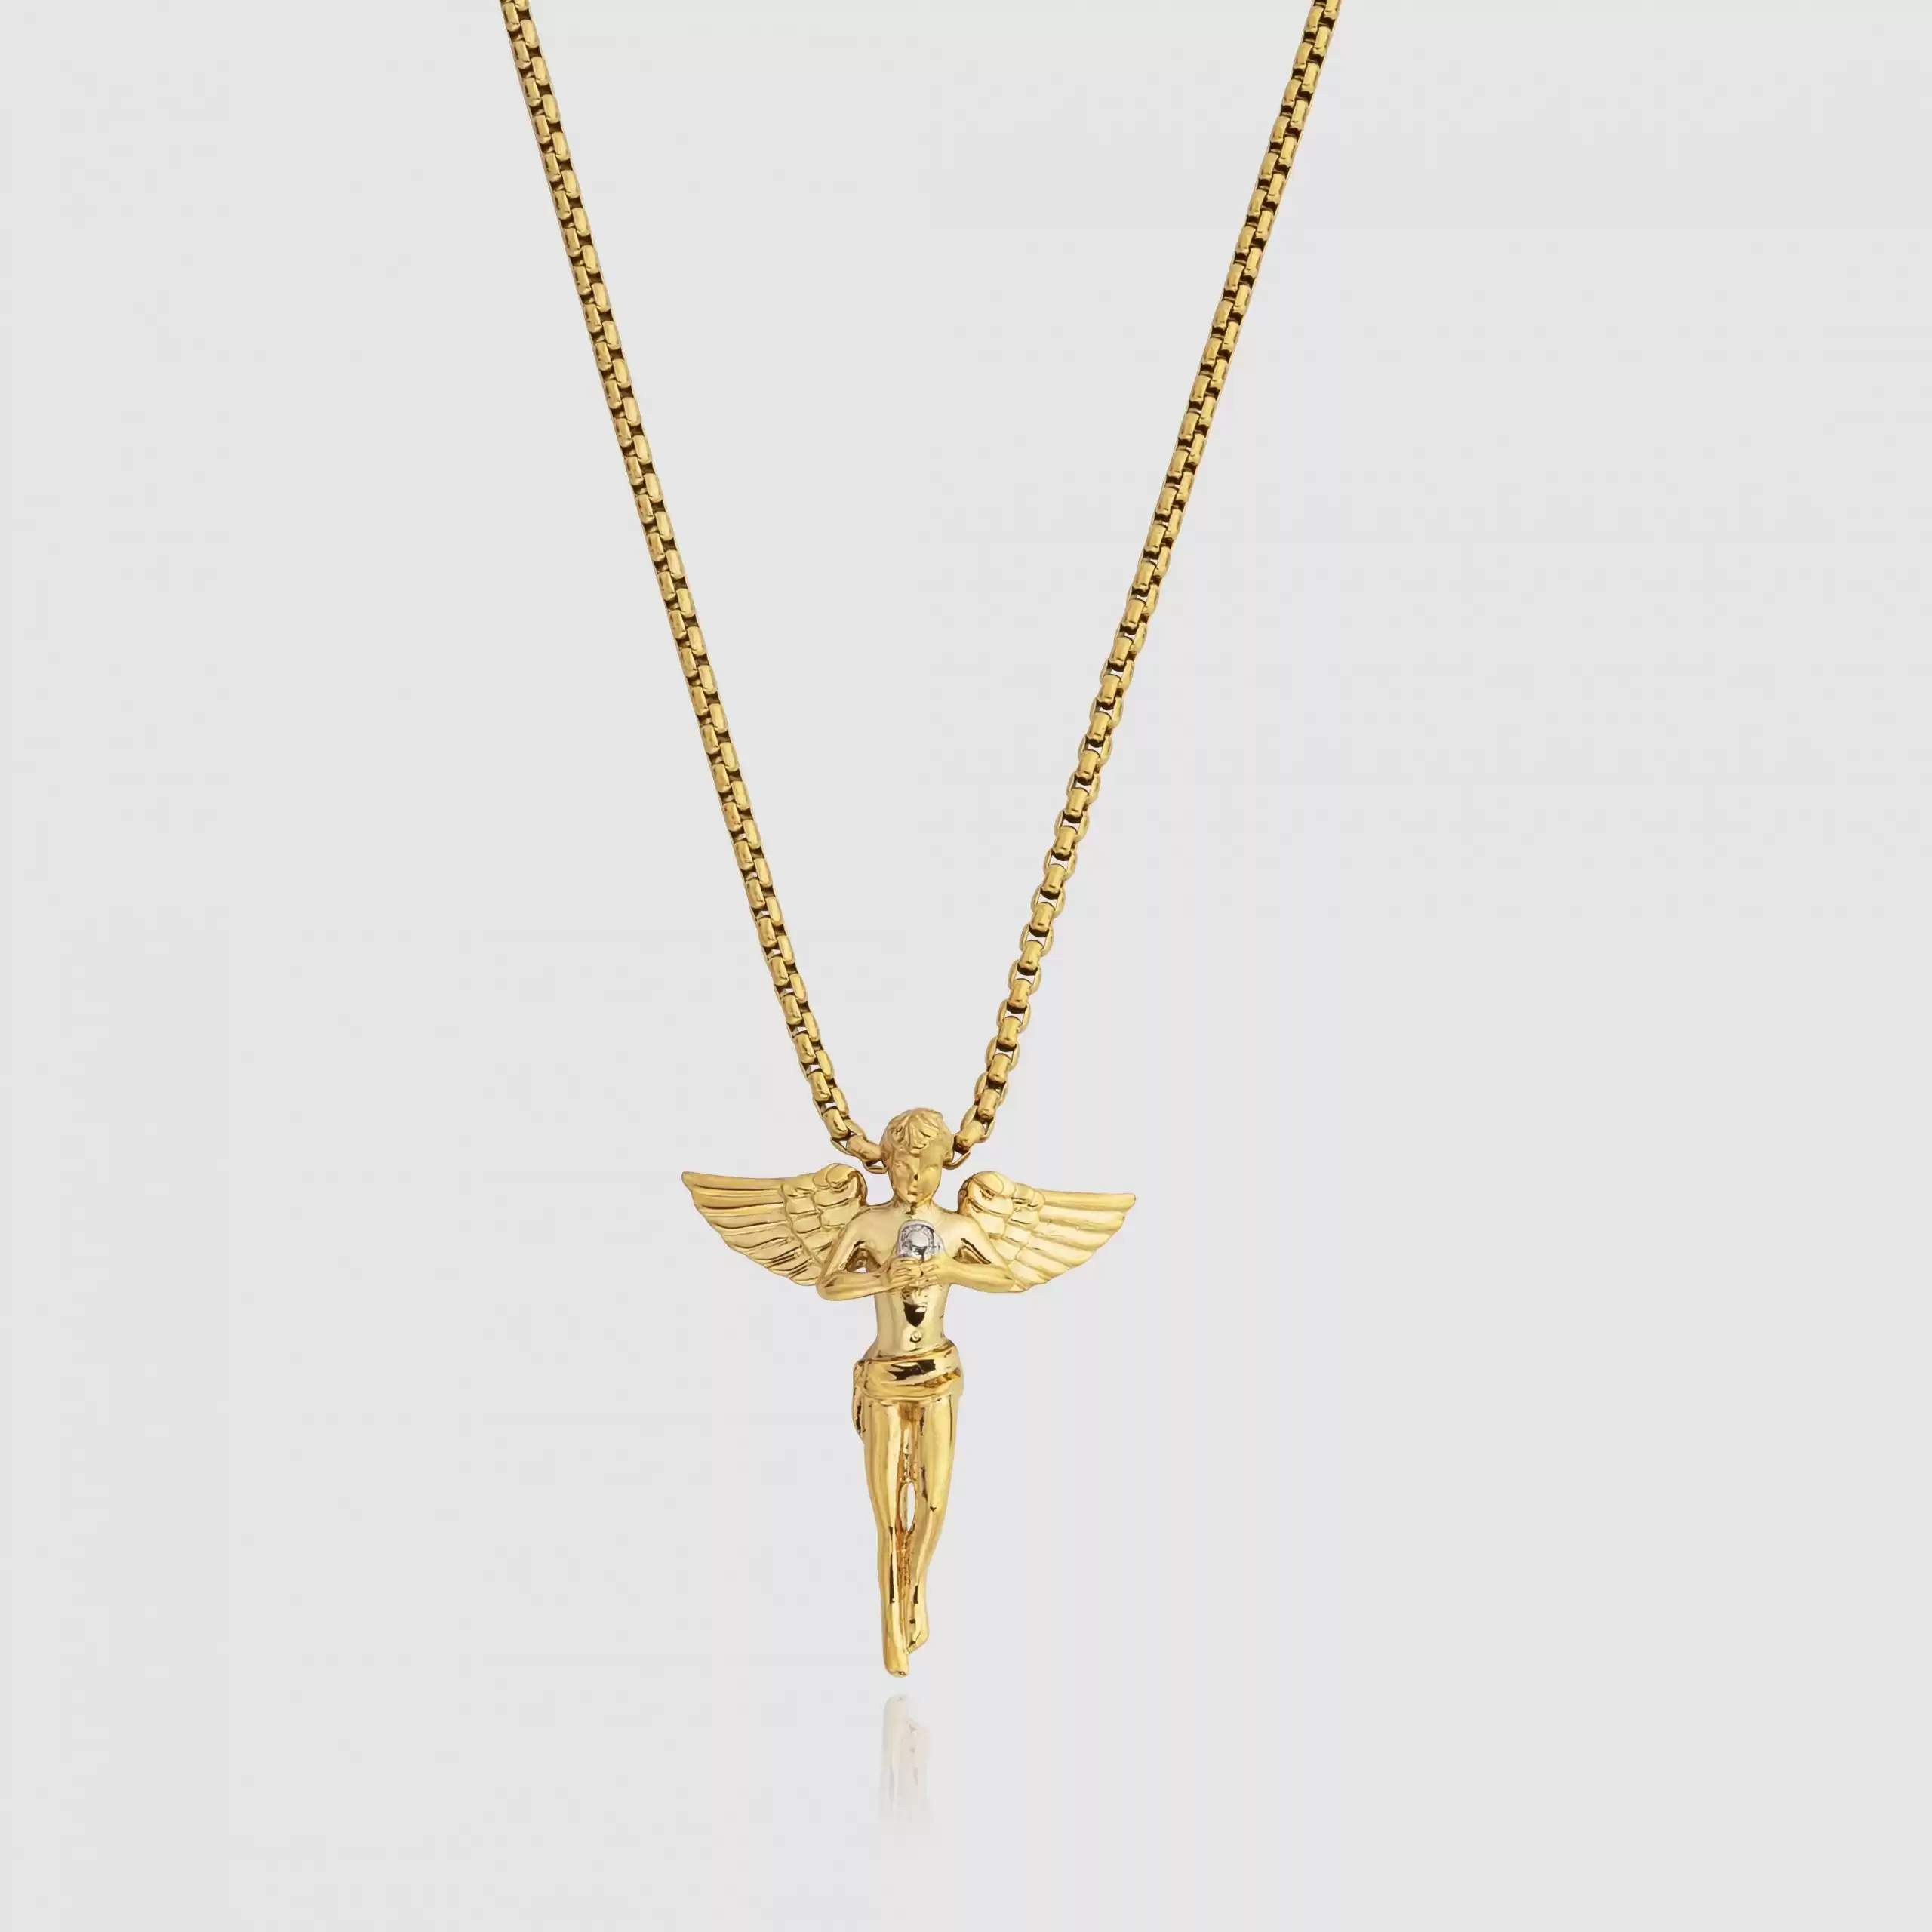 CRAFTD London Angel Pendant Necklace